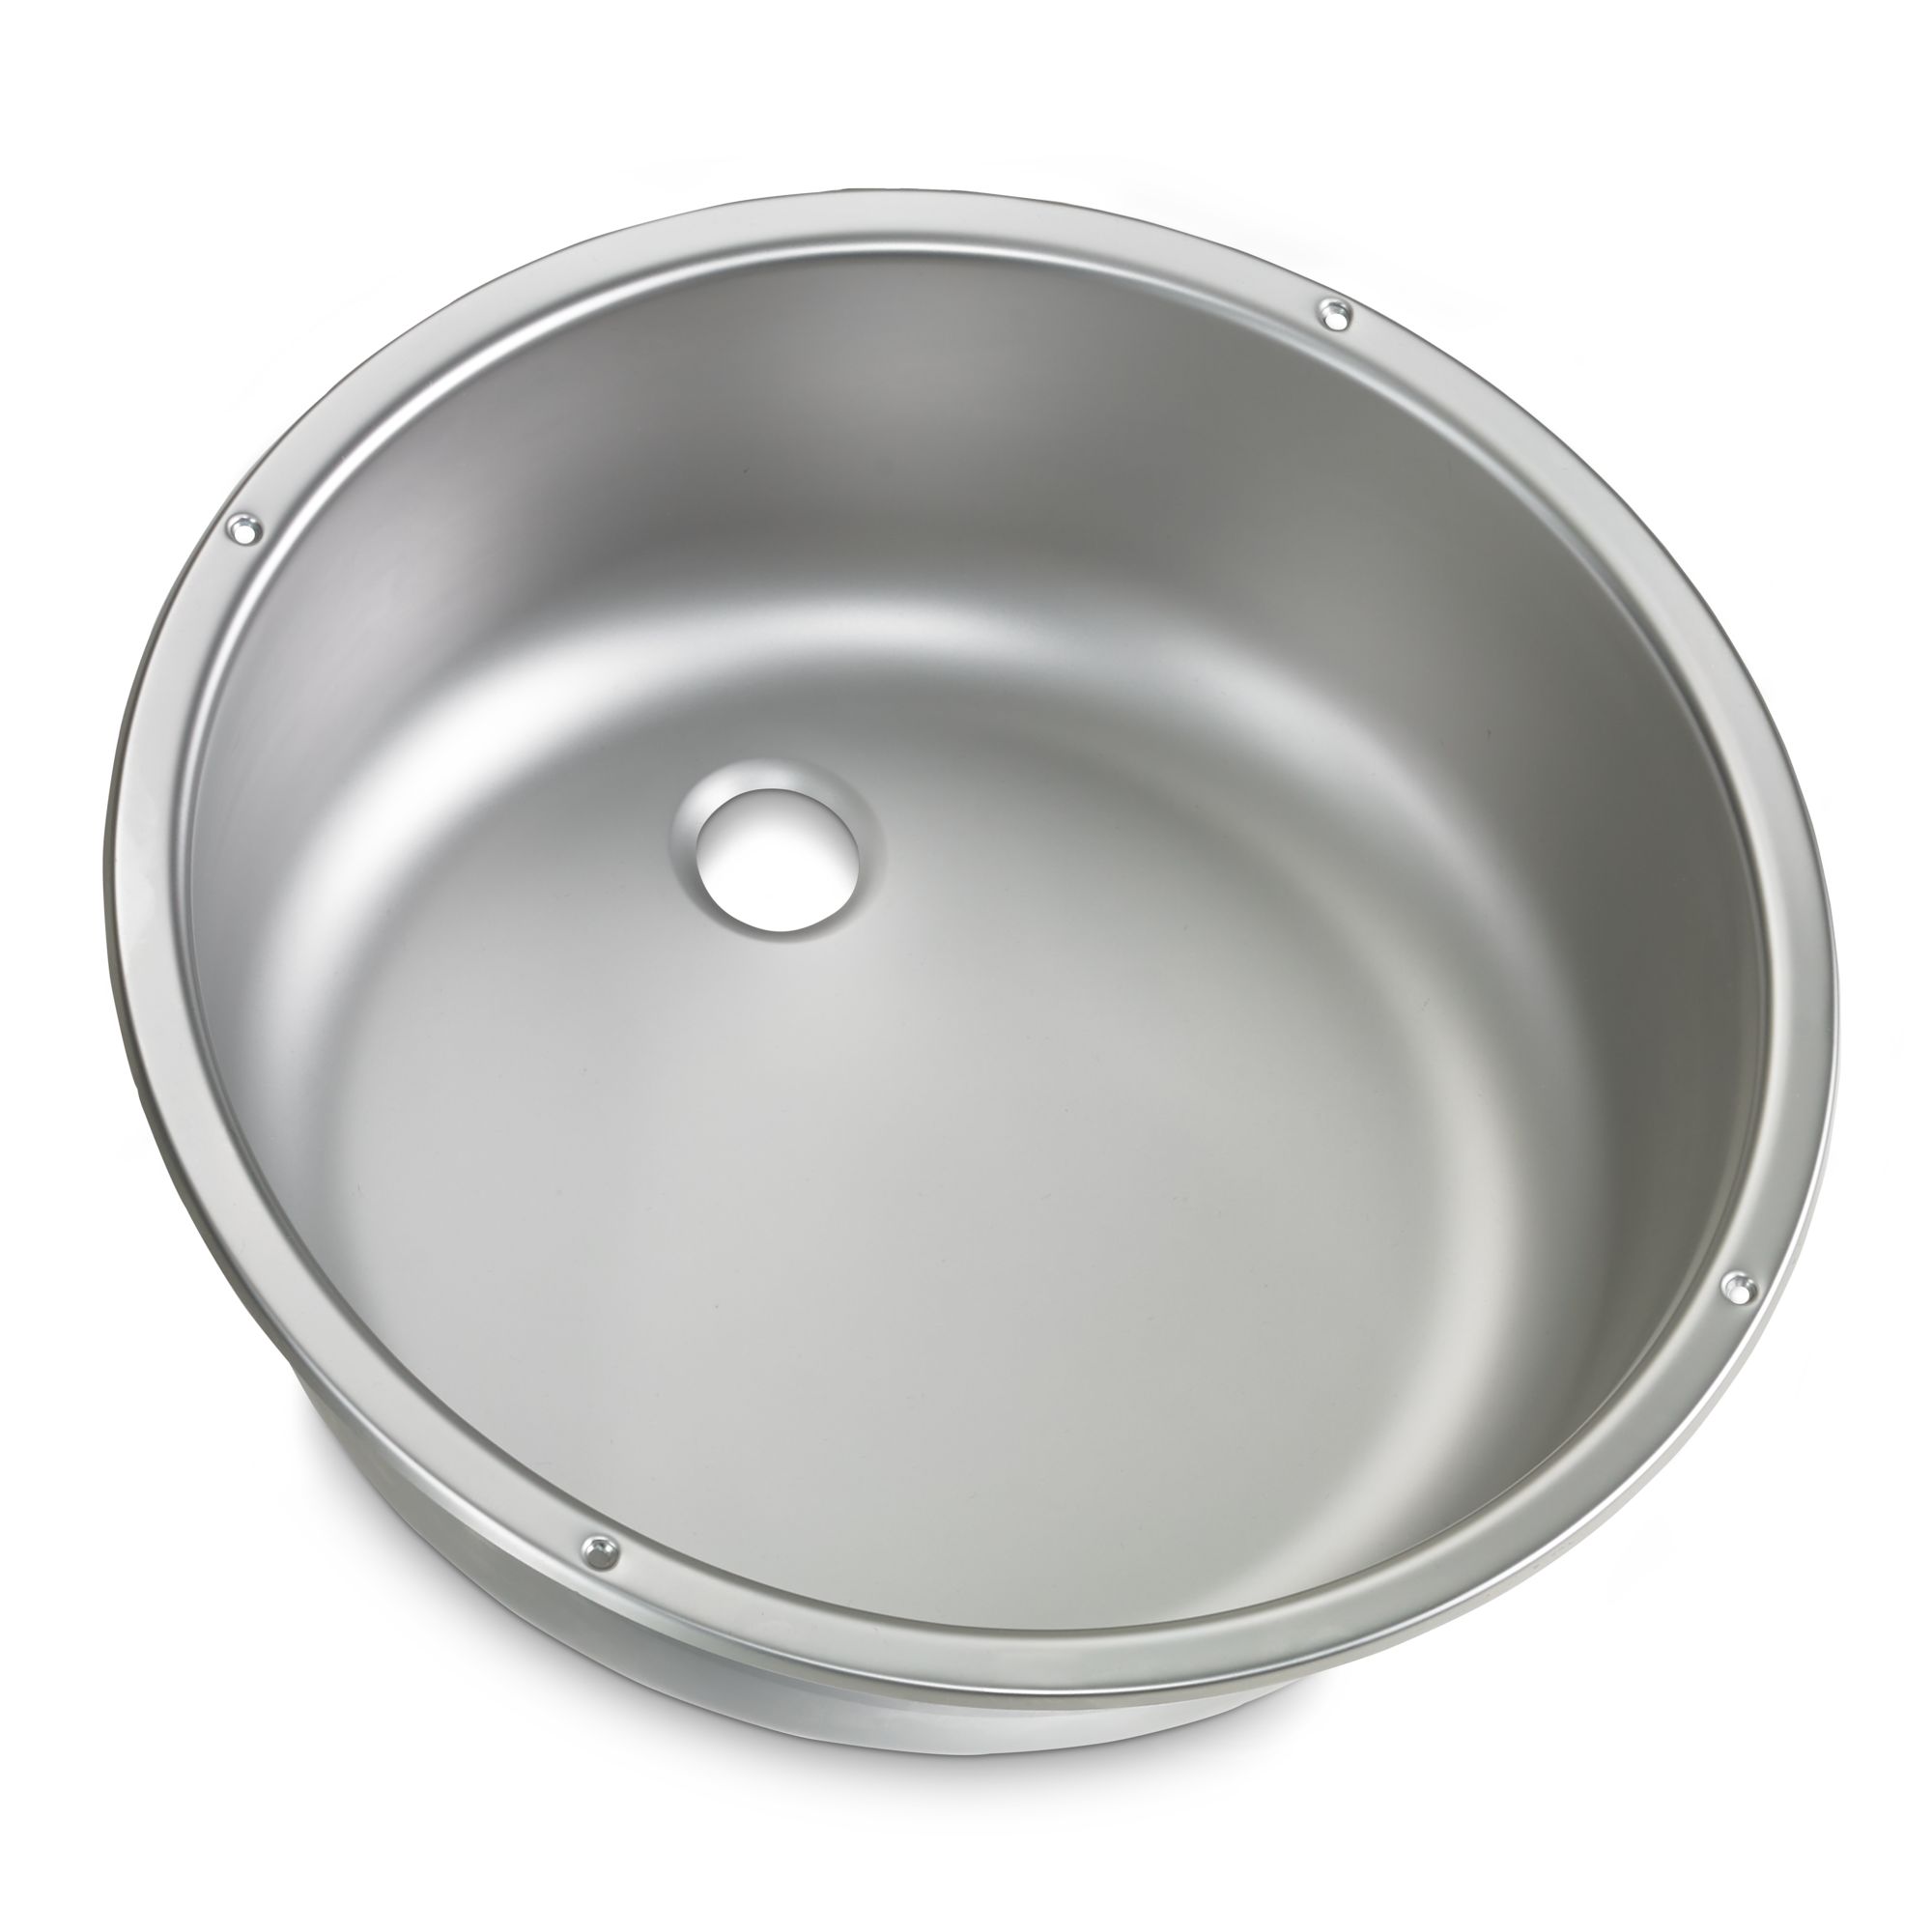 Dometic VA 928 stainless steel sink/wash basin, 400 mm diameter